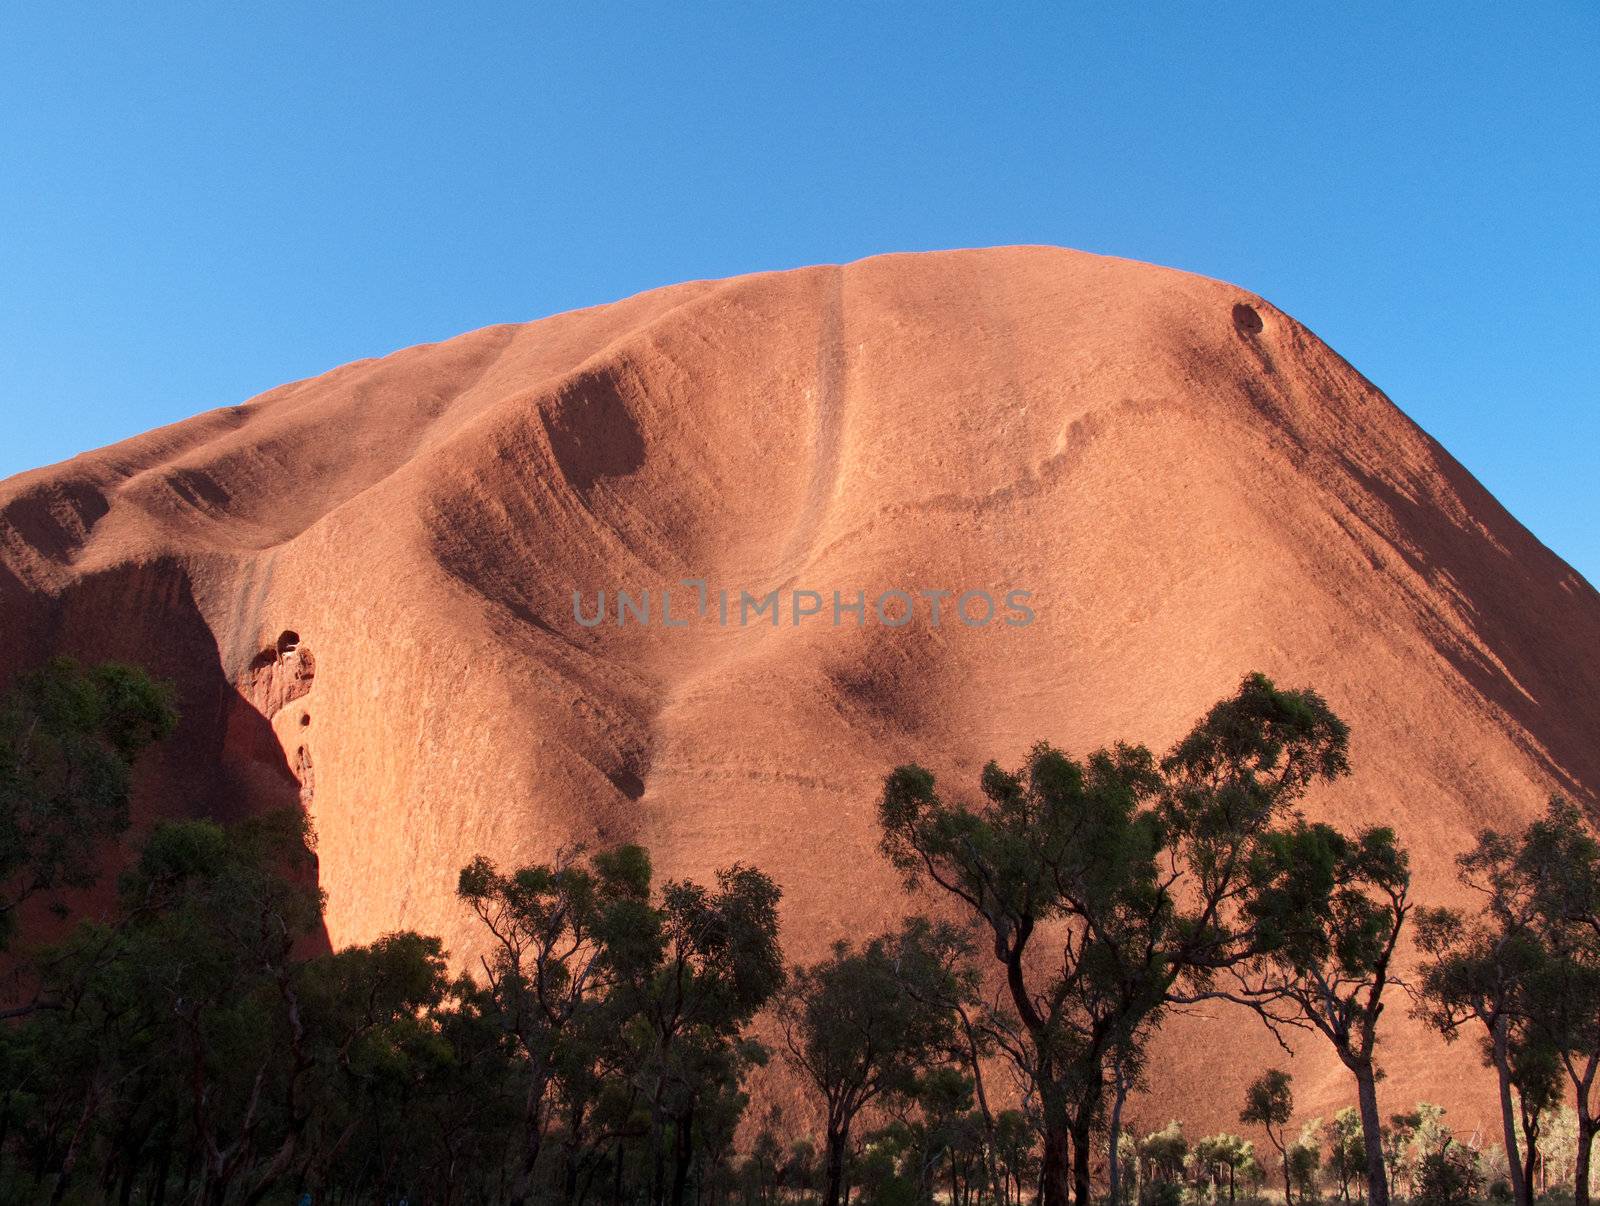 Ayers Rock in Australia by steheap